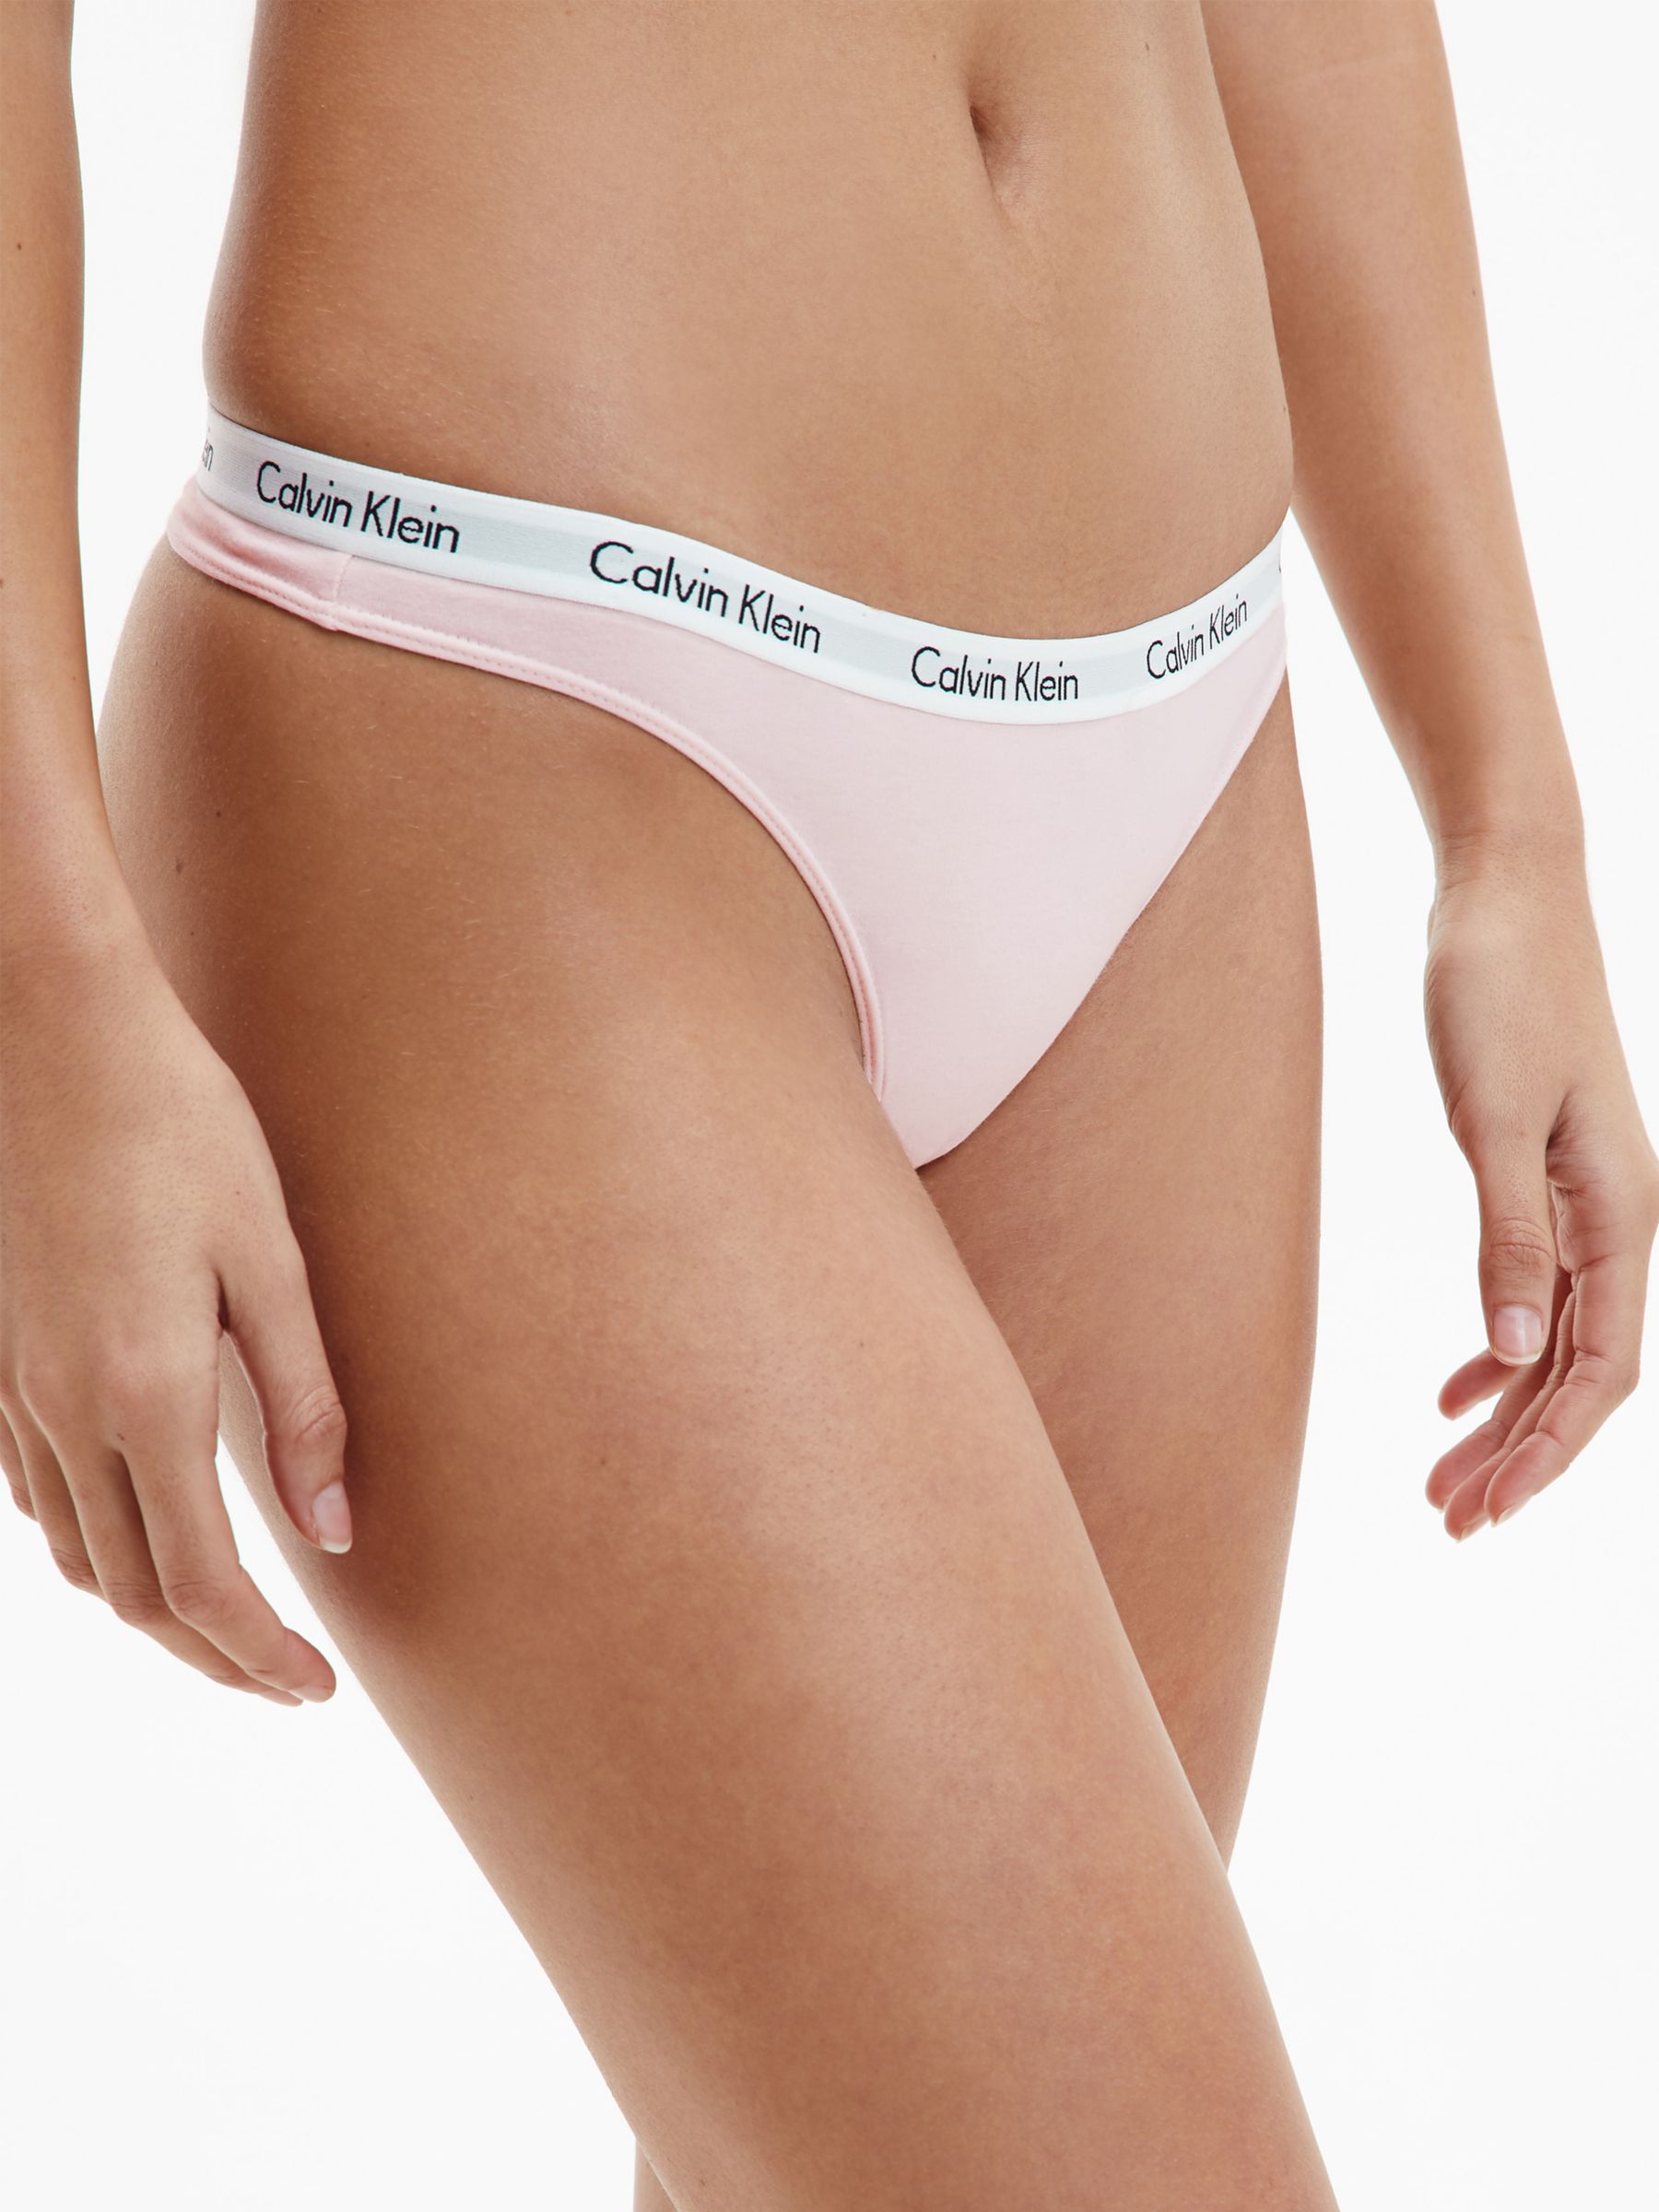 Calvin Klein Carousel Thong, Nymphs Thigh